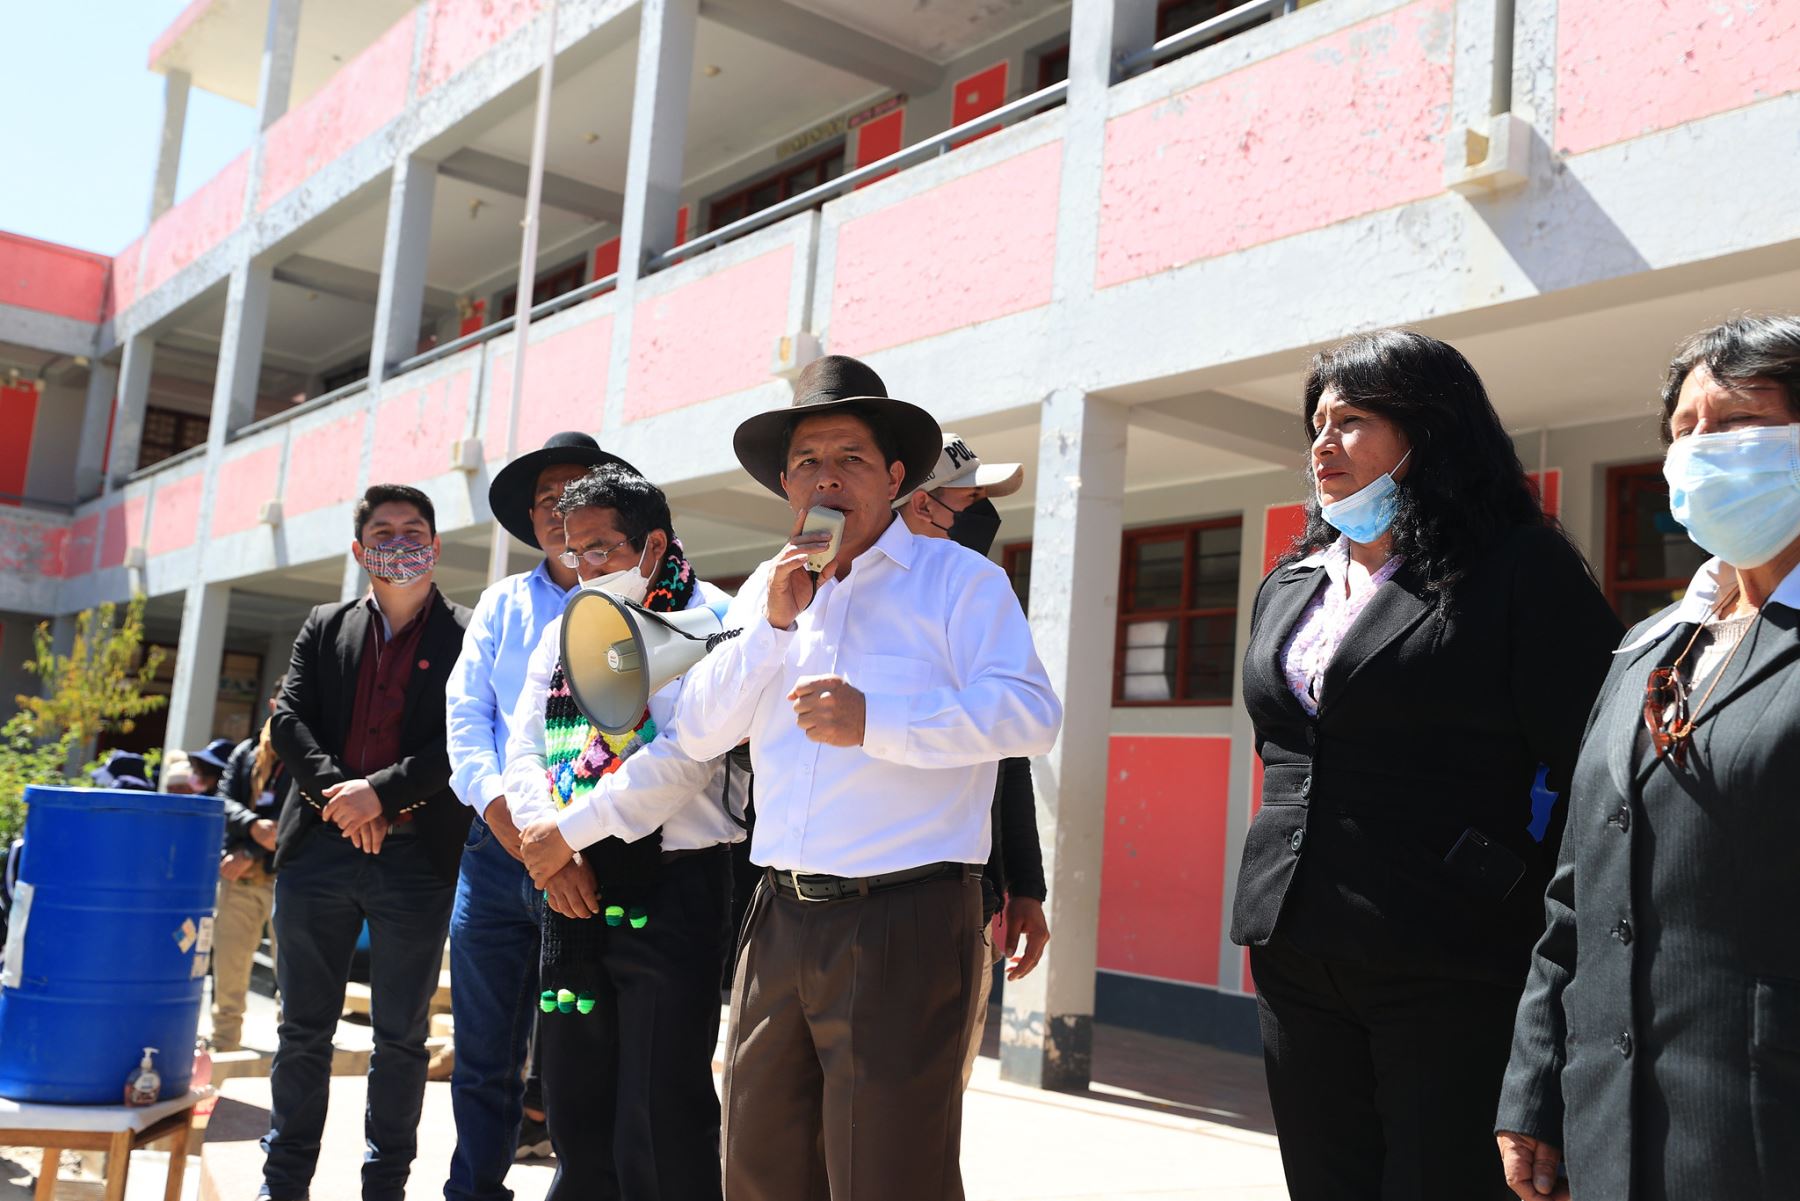 Presidente Pedro Castillo inspecciona la I.E Mariscal Cáceres de la provincia de Tayacaja en Huancavelica.
Foto: ANDINA/Prensa Presidencia